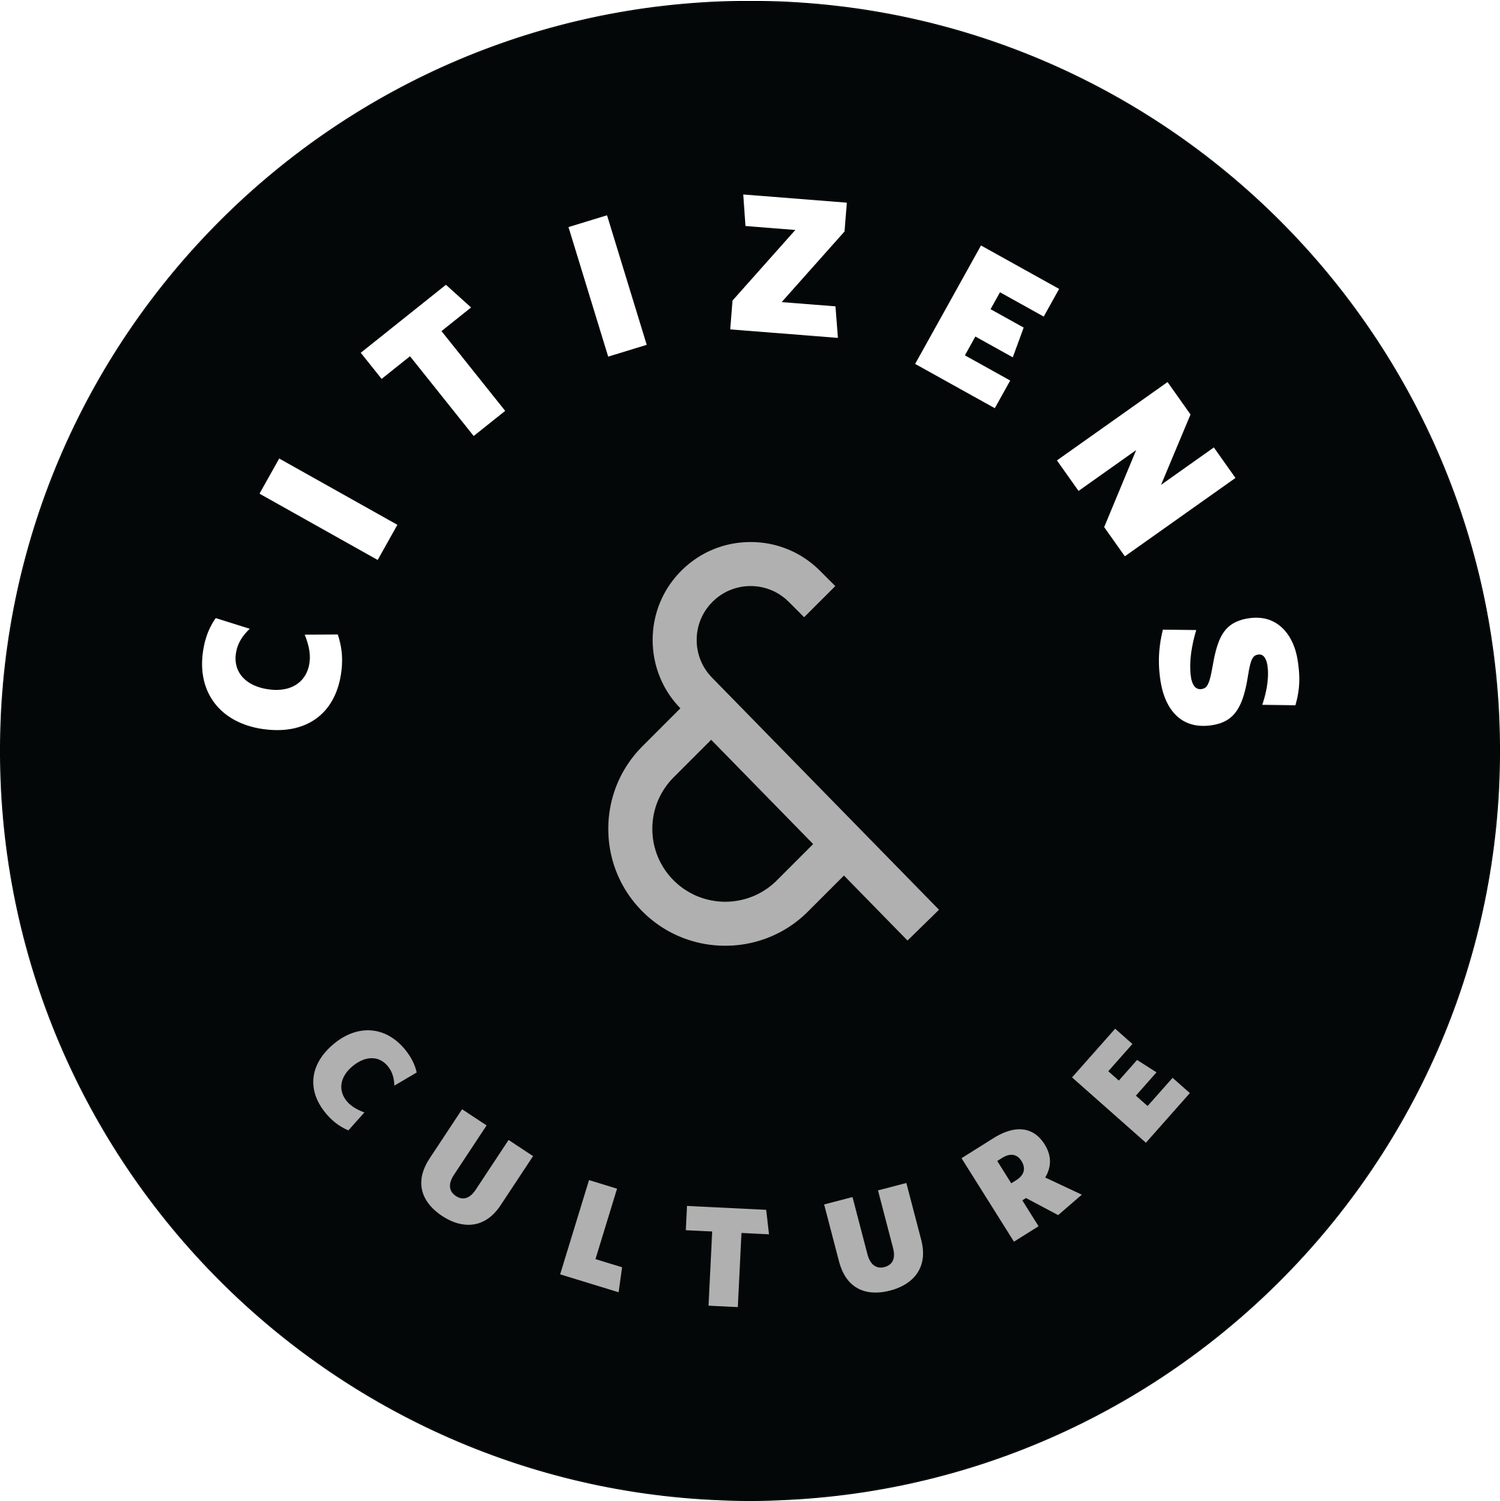 Citizens &amp; Culture